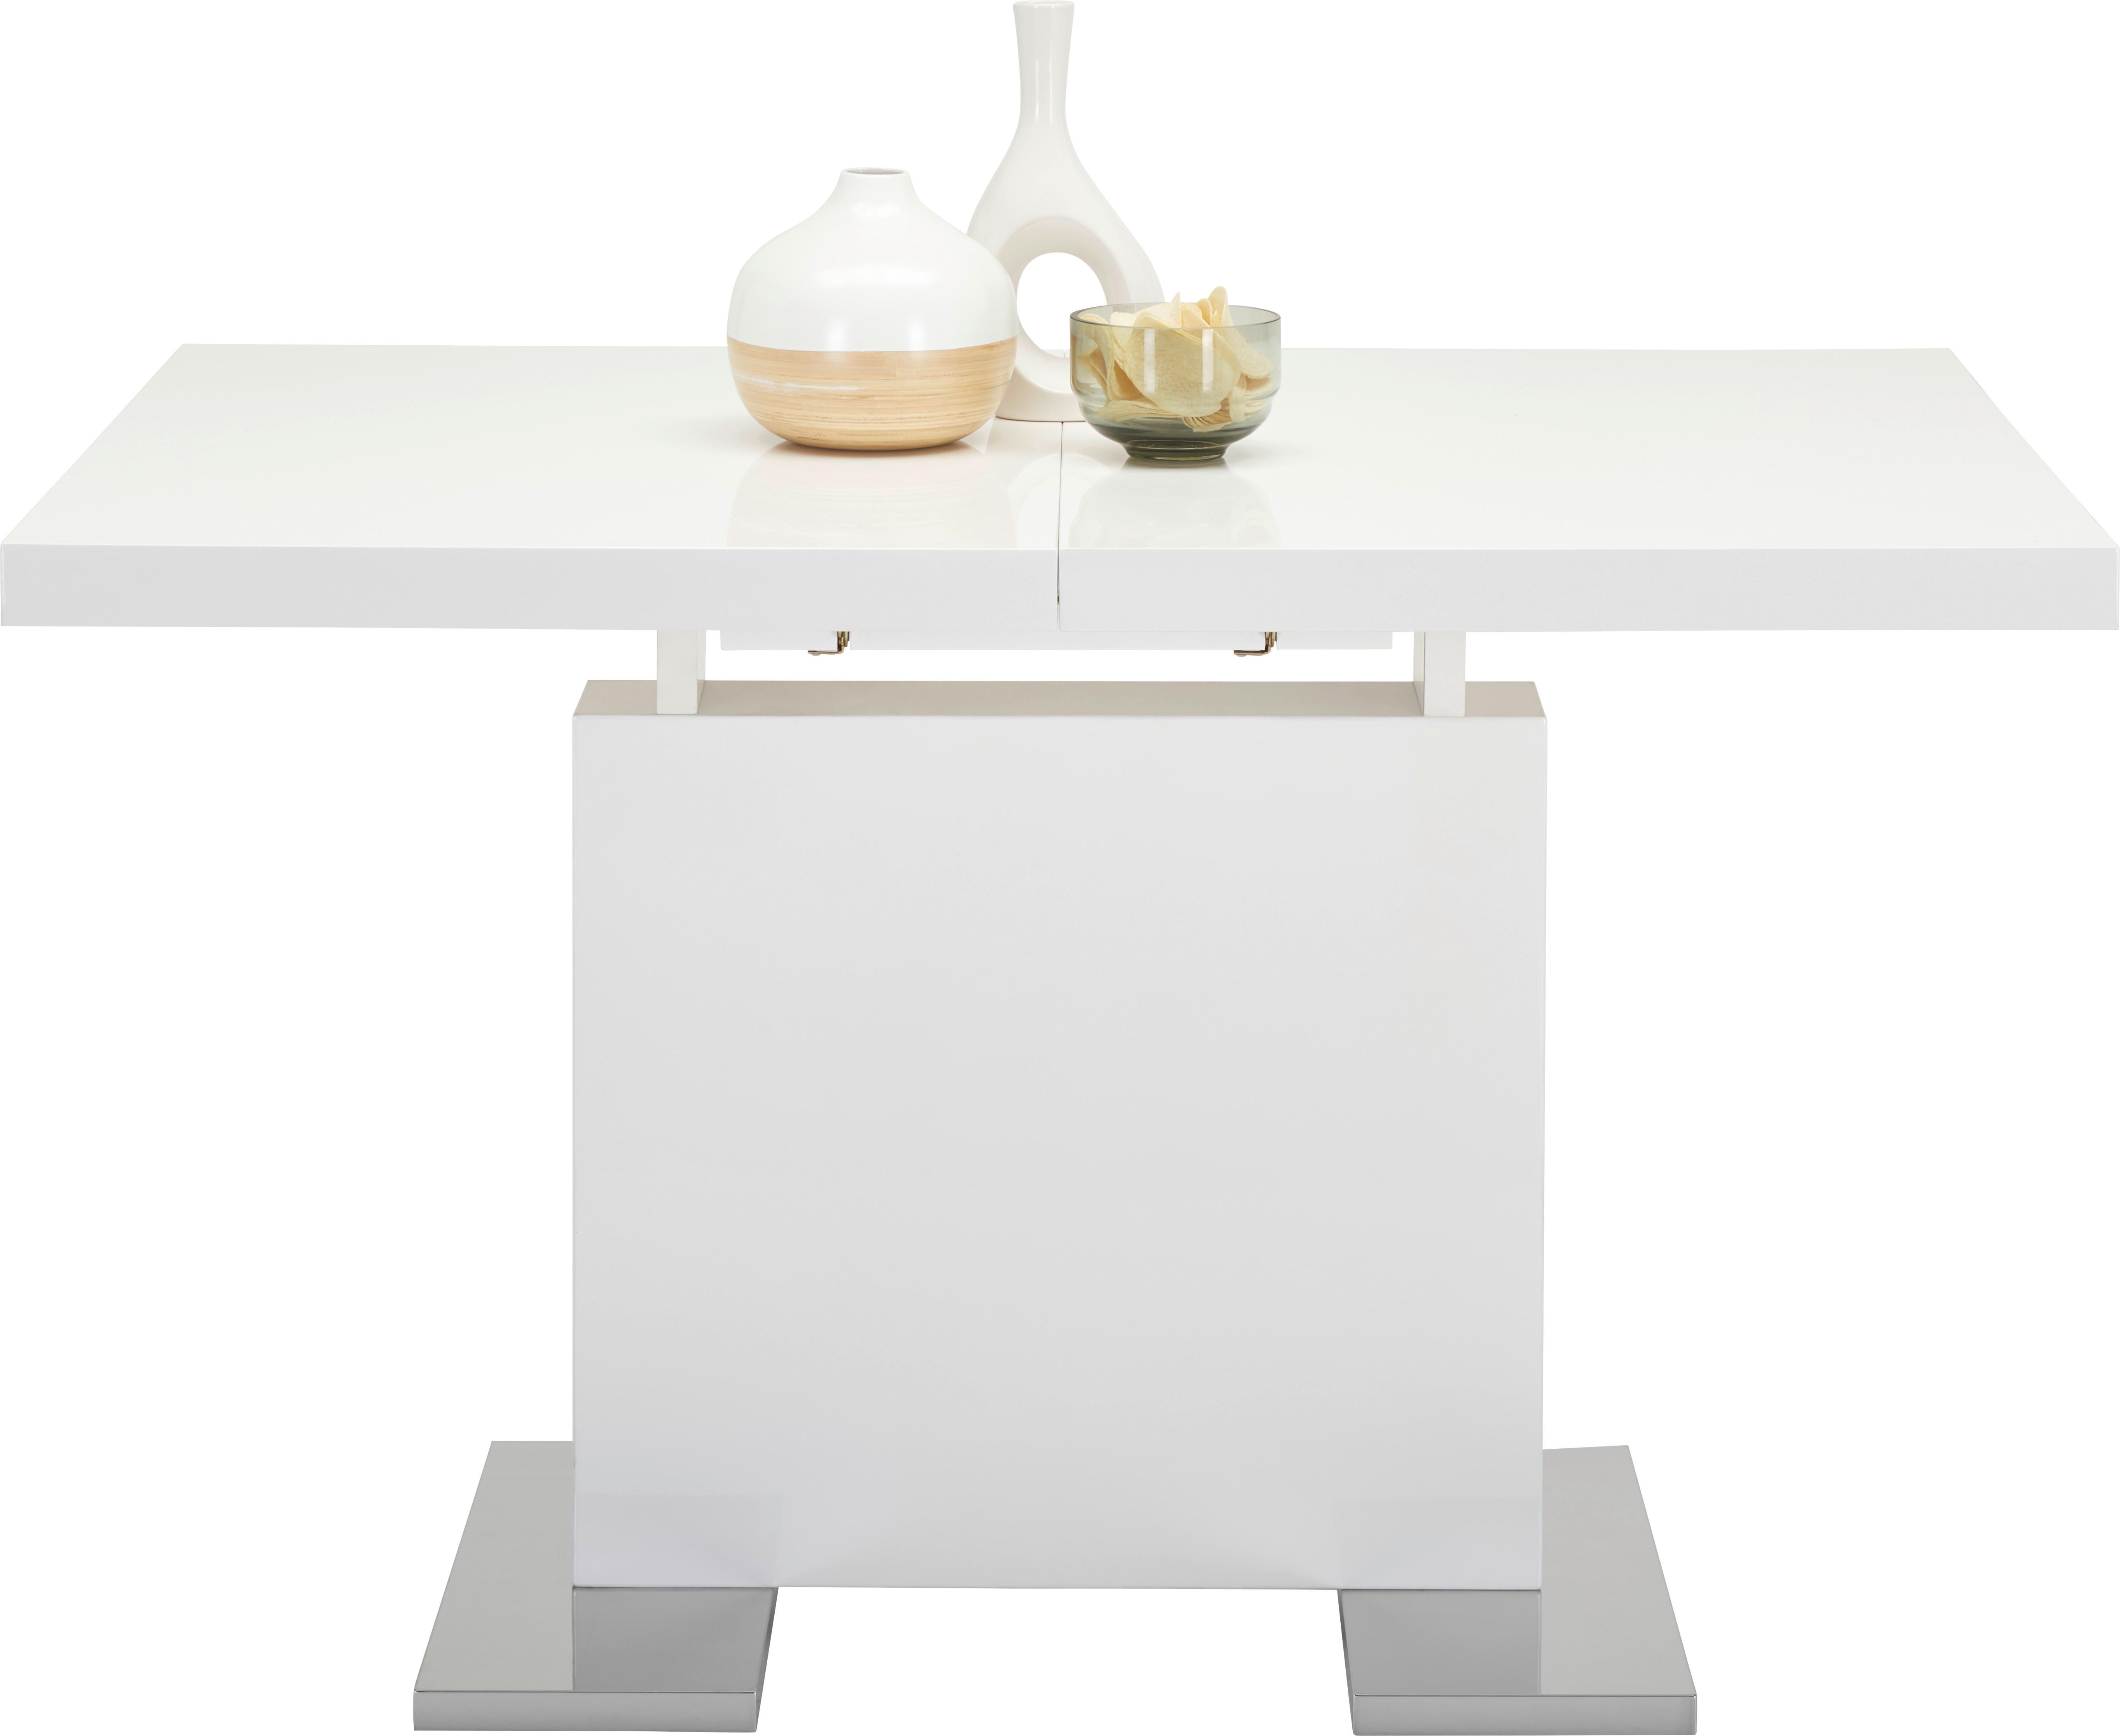 Výsuvný Stůl Campino - bílá/barvy chromu, Moderní, kov/kompozitní dřevo (120-160/80/76cm) - Premium Living